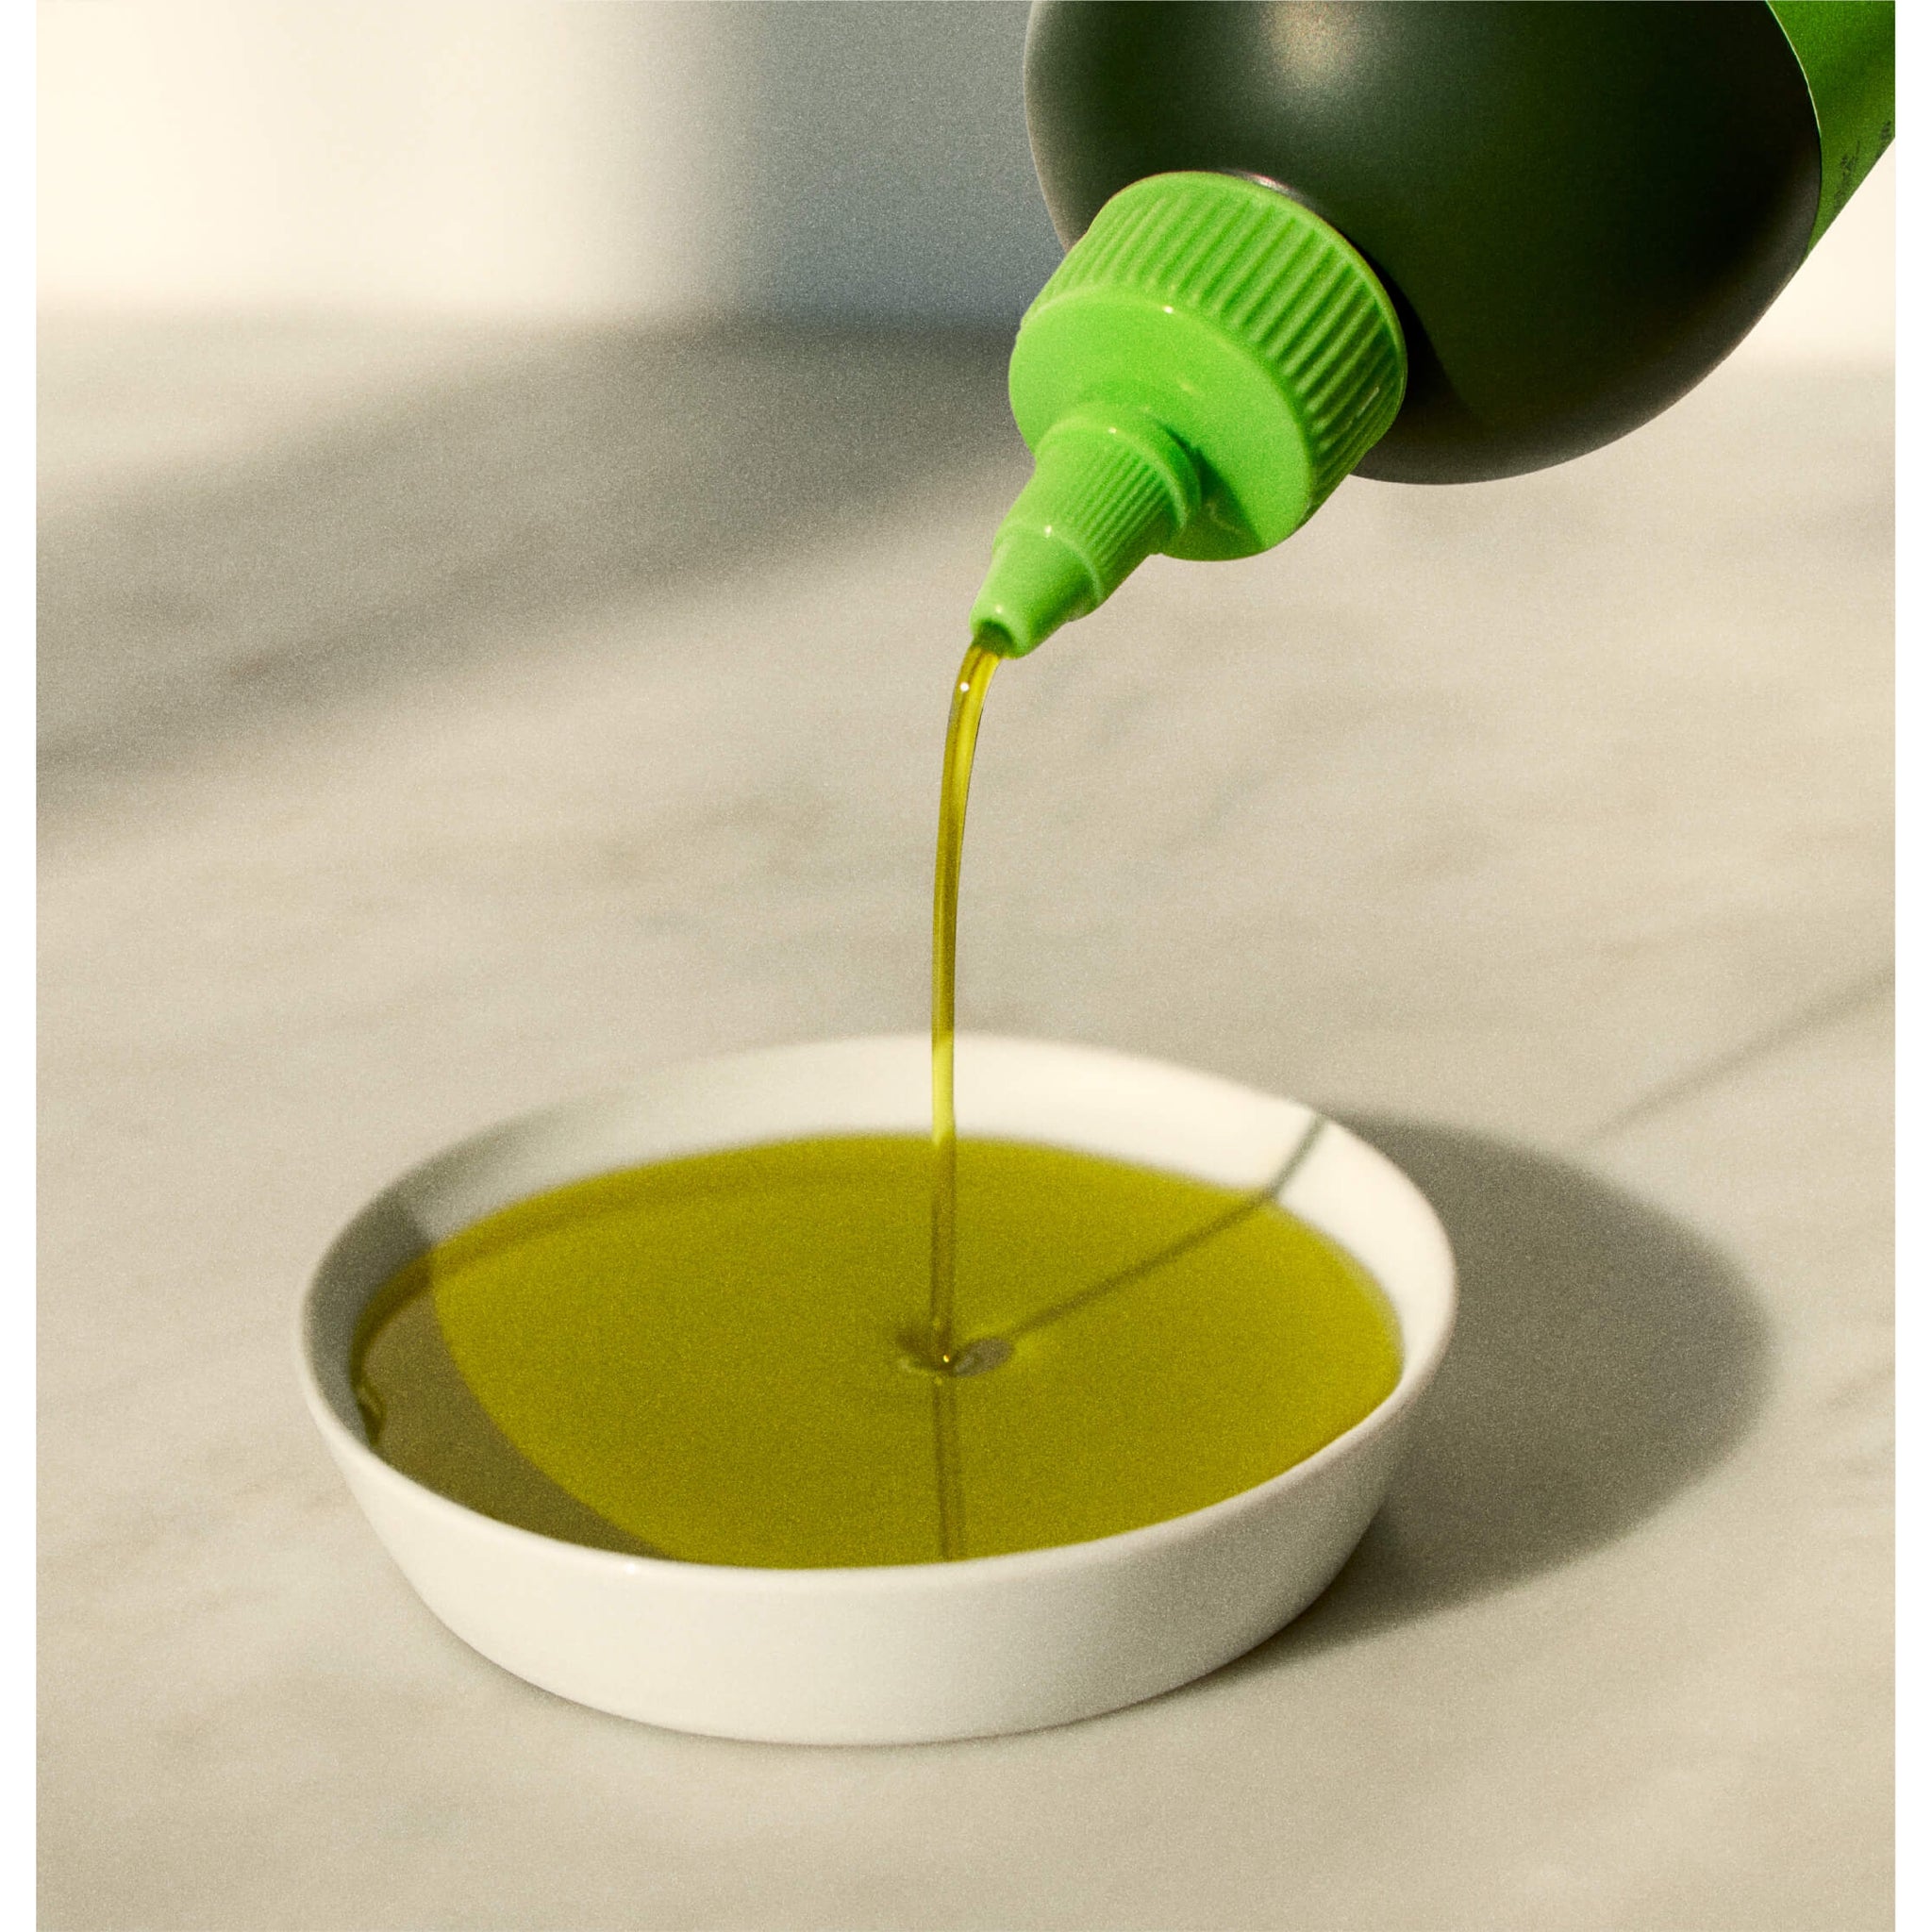 Graza | 'Drizzle' Extra Virgin Olive Oil